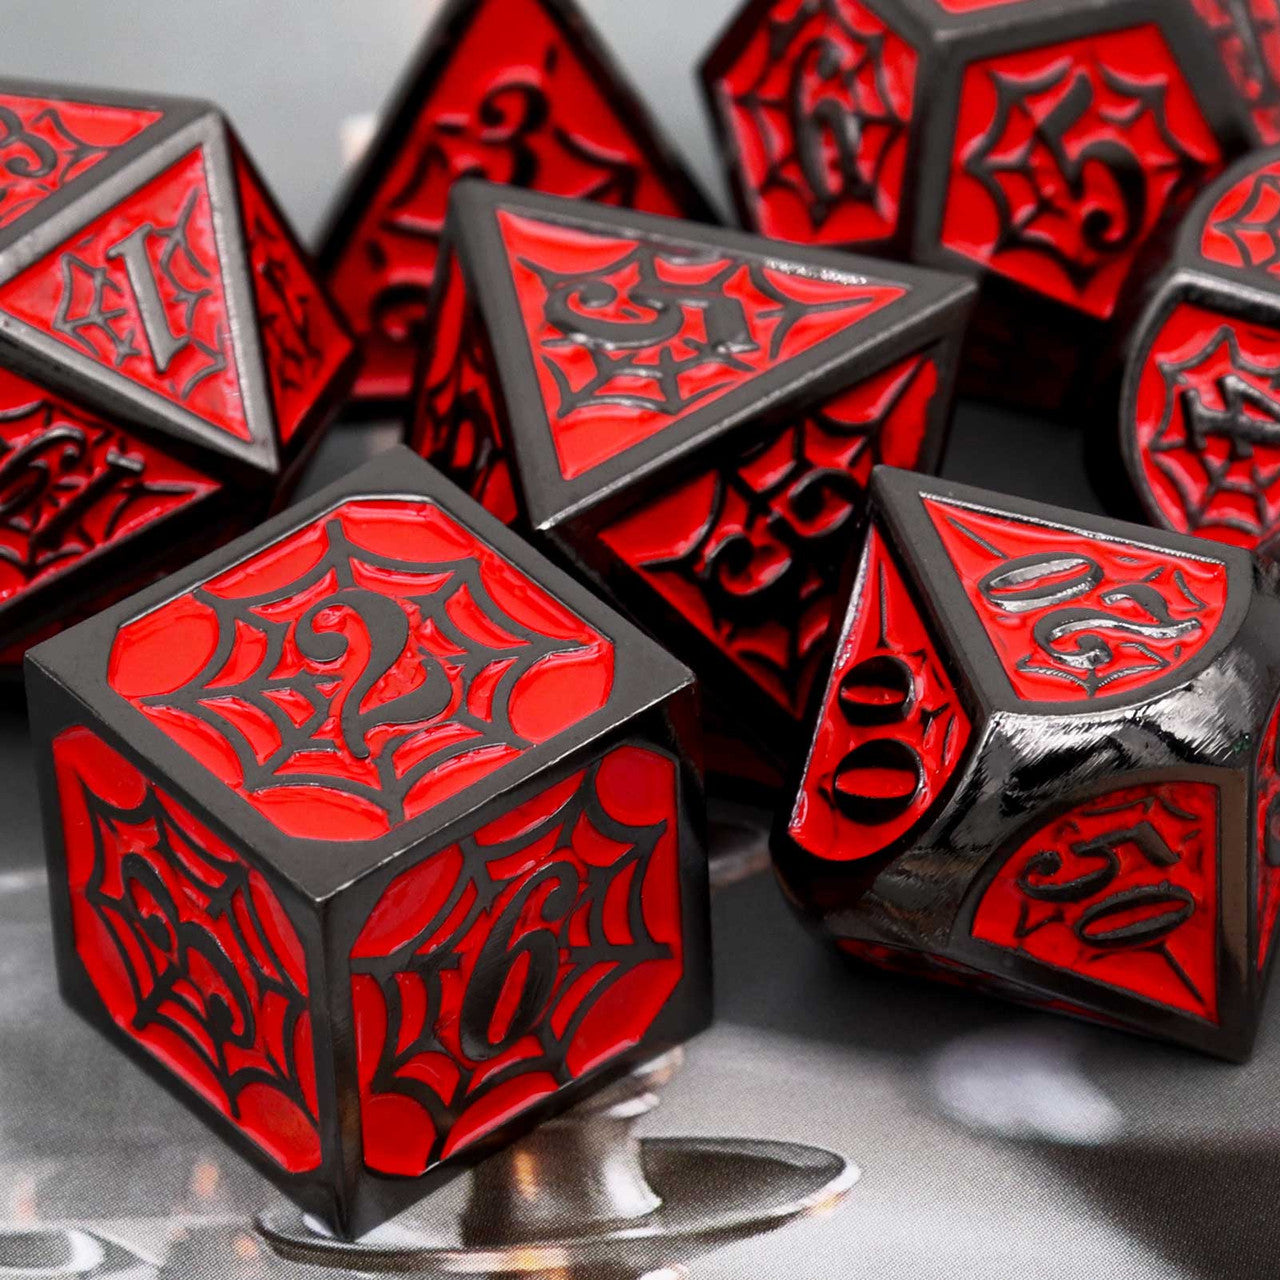 black red dice, black dice, red dice, red metal dice, metal dice black